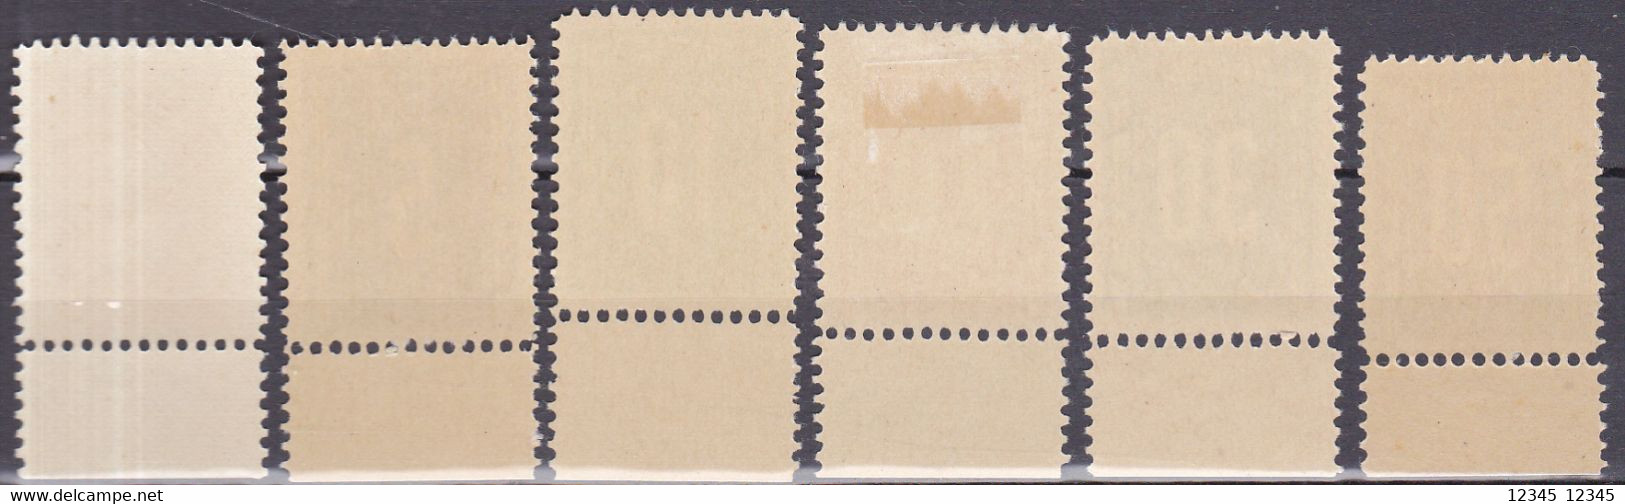 Israël 1949, Postfris MNH, Port (20=MH) - Postage Due